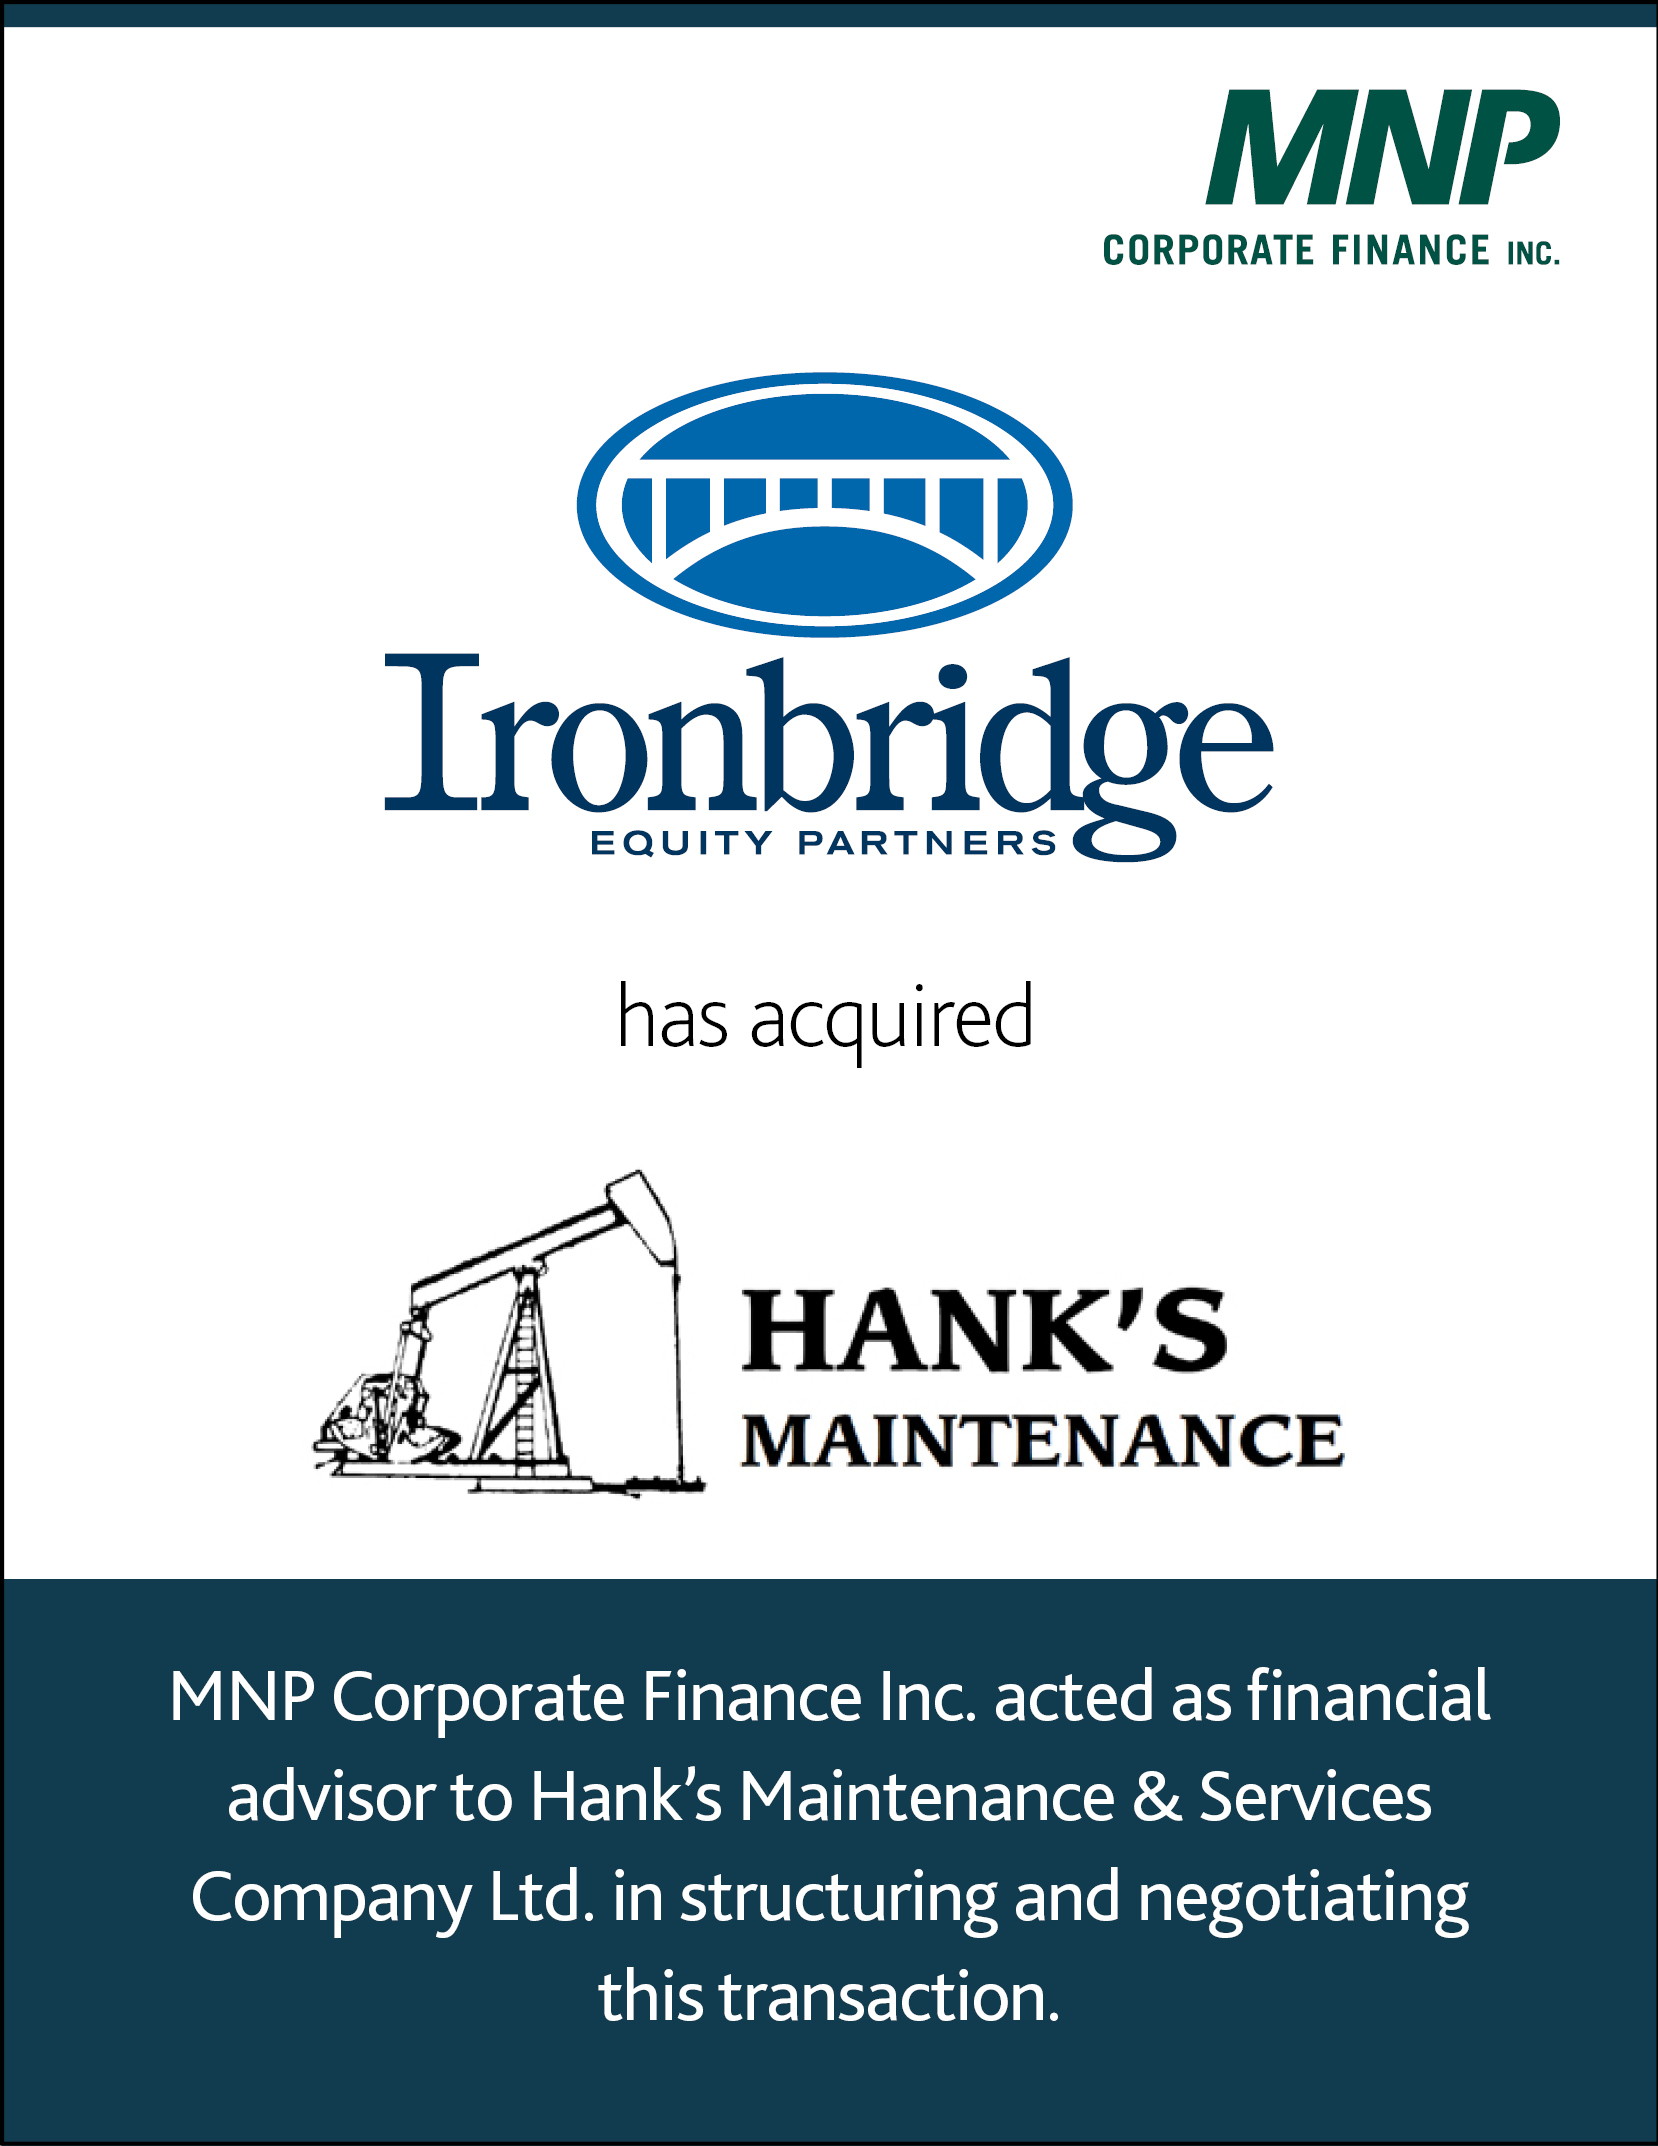 Ironbridge has acquired Hanks Maintenance. 